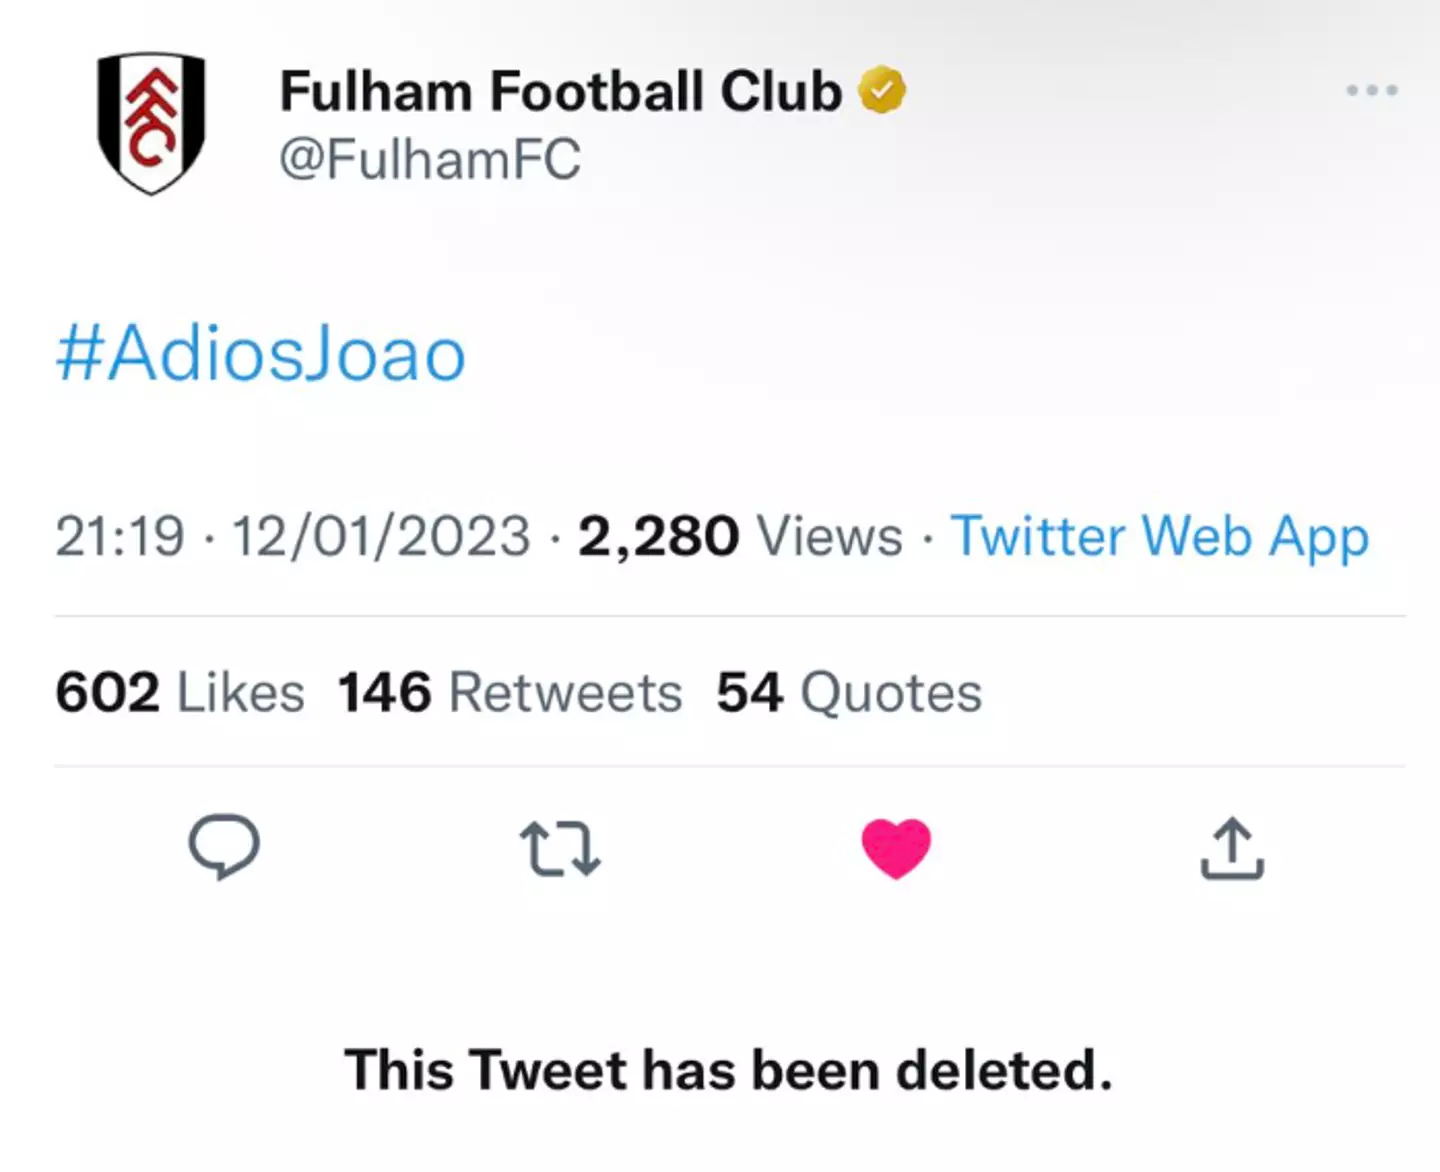 Fulham's deleted tweet. (Image